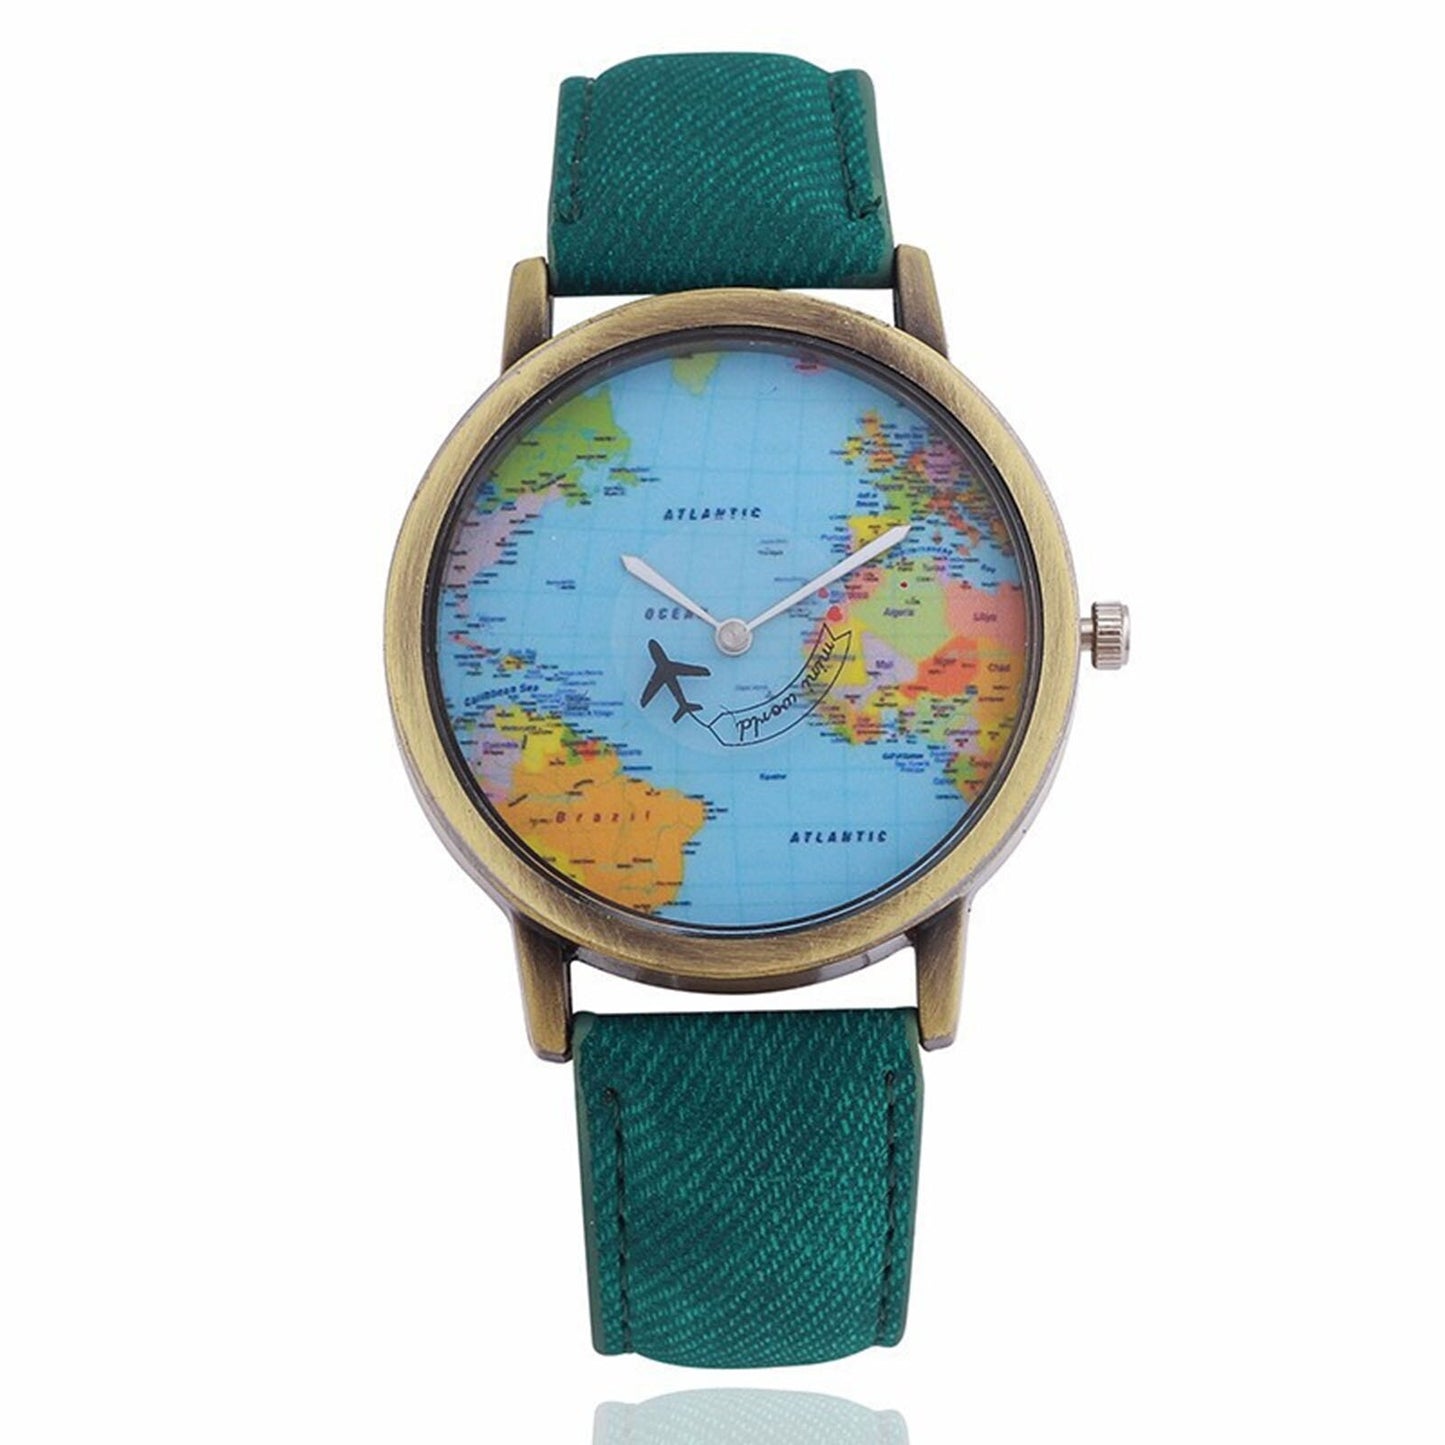 Quartz Watch For Women And Men Fashion Round Dial Leather Strap Wristwatch Women Business Travel Watchese